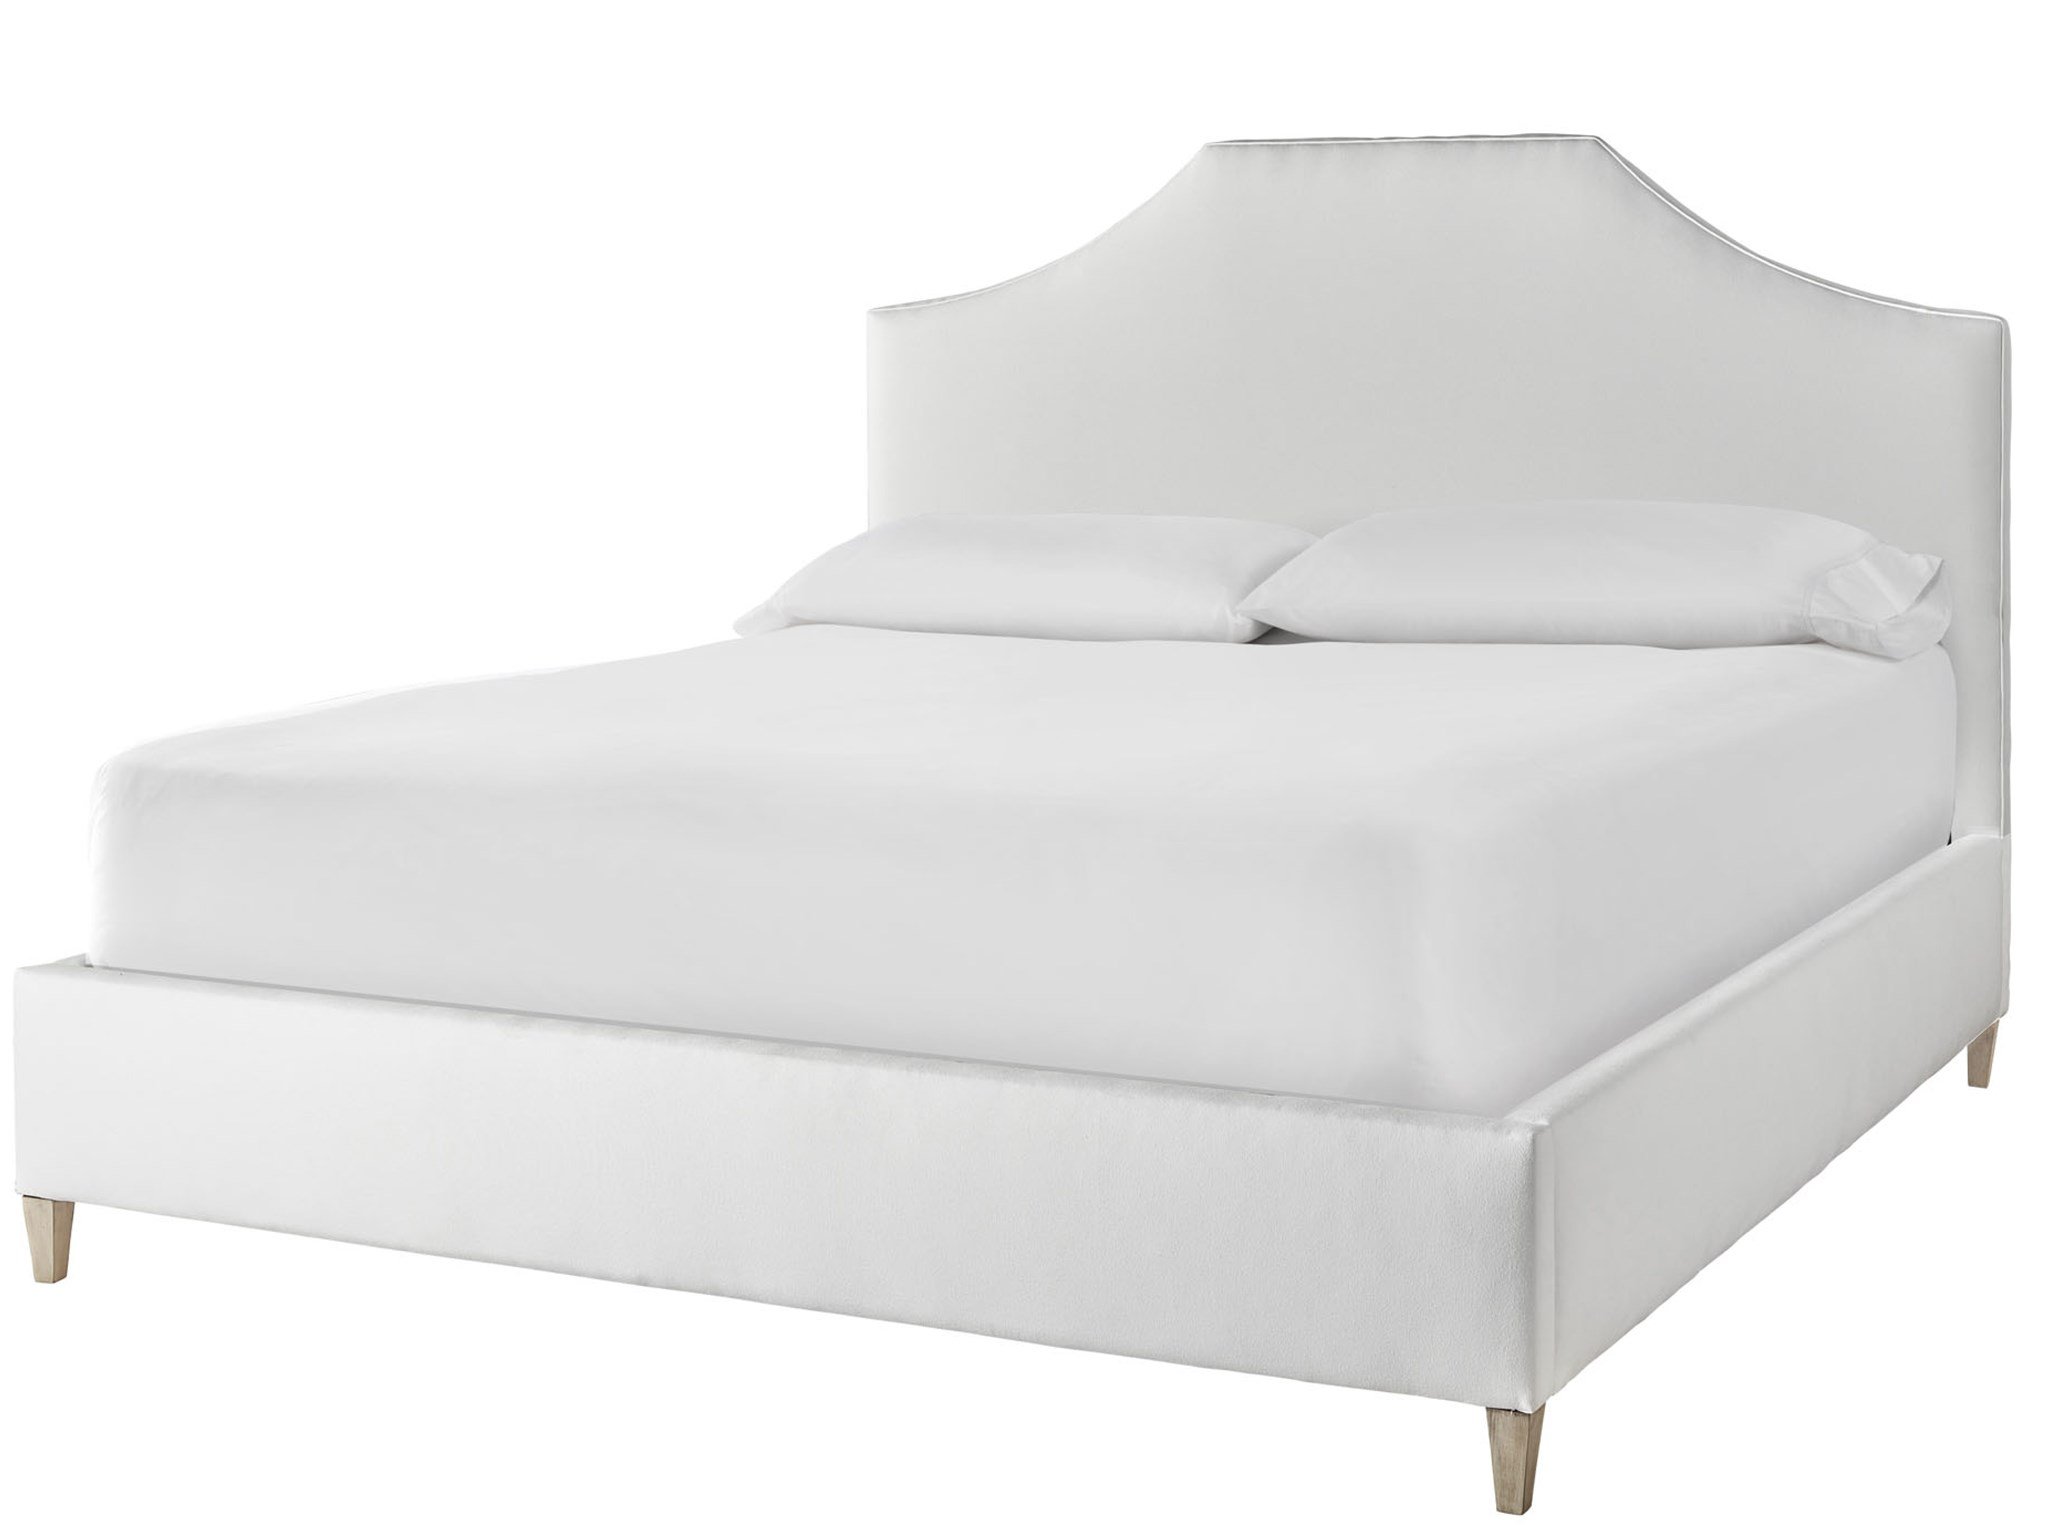 Blythe Upholstered Bed Queen